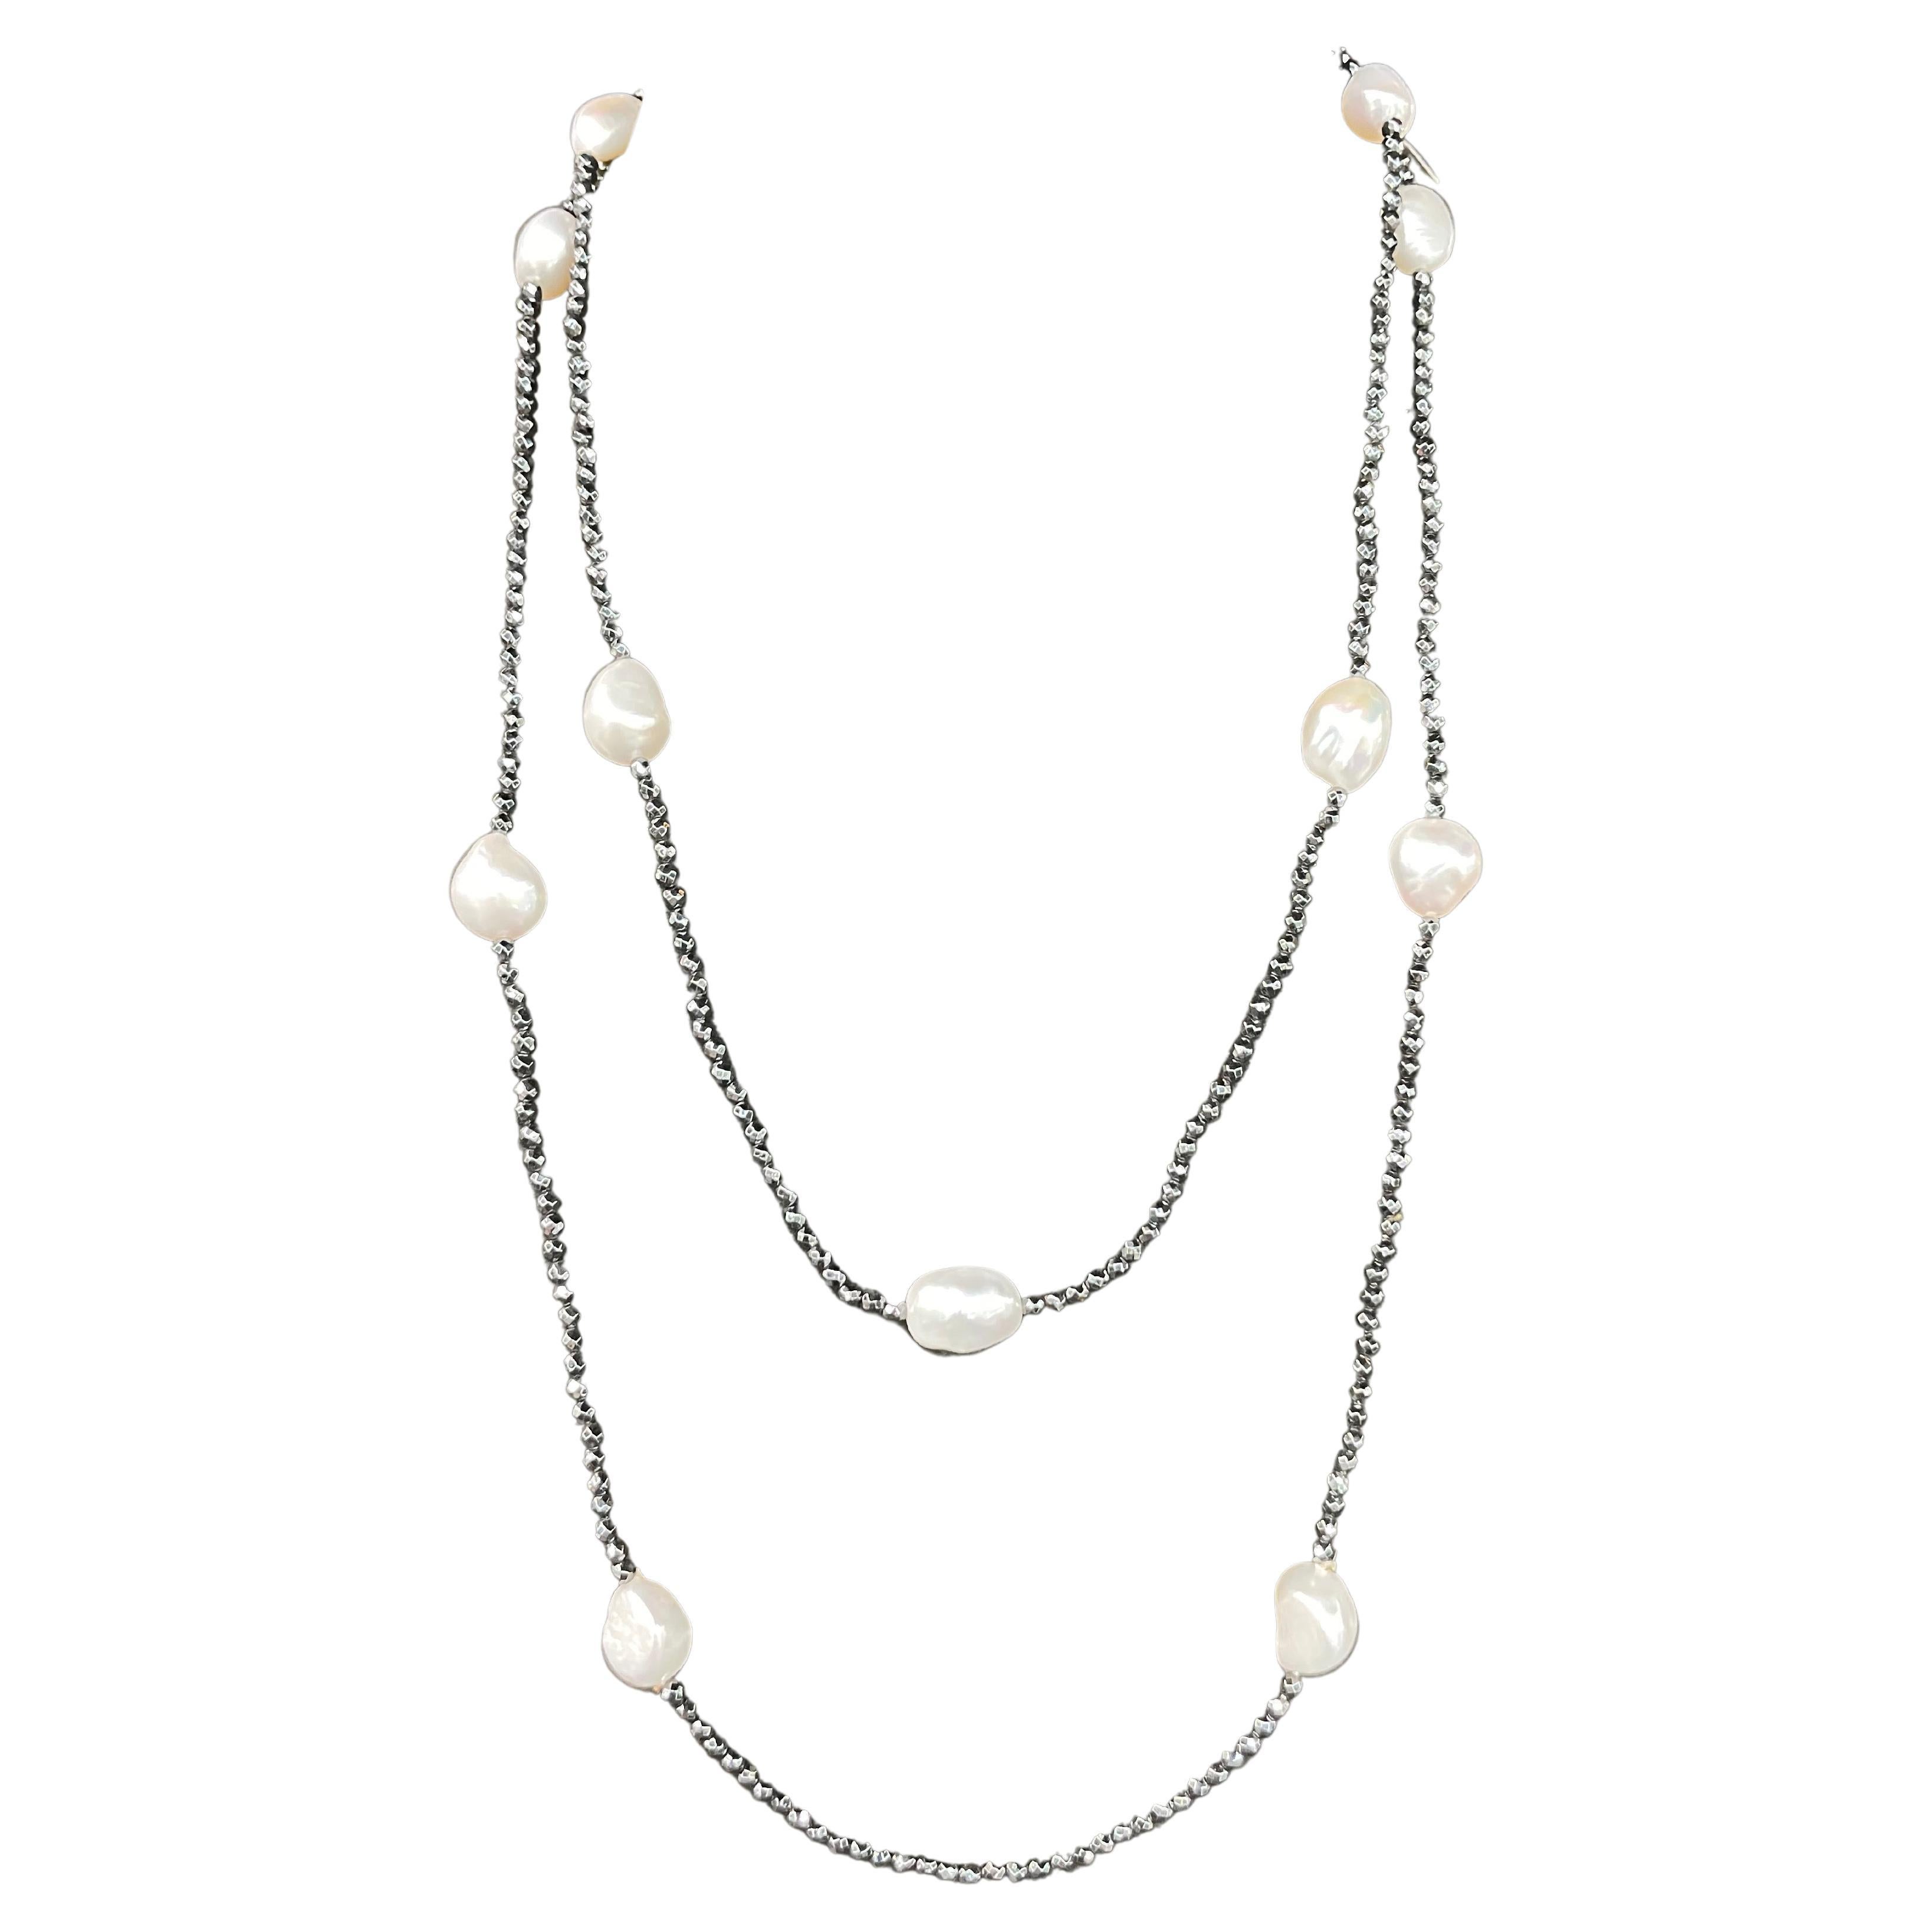 Strand of Hematite White Pearl Multi-Strand Necklace 50 Inches For Sale